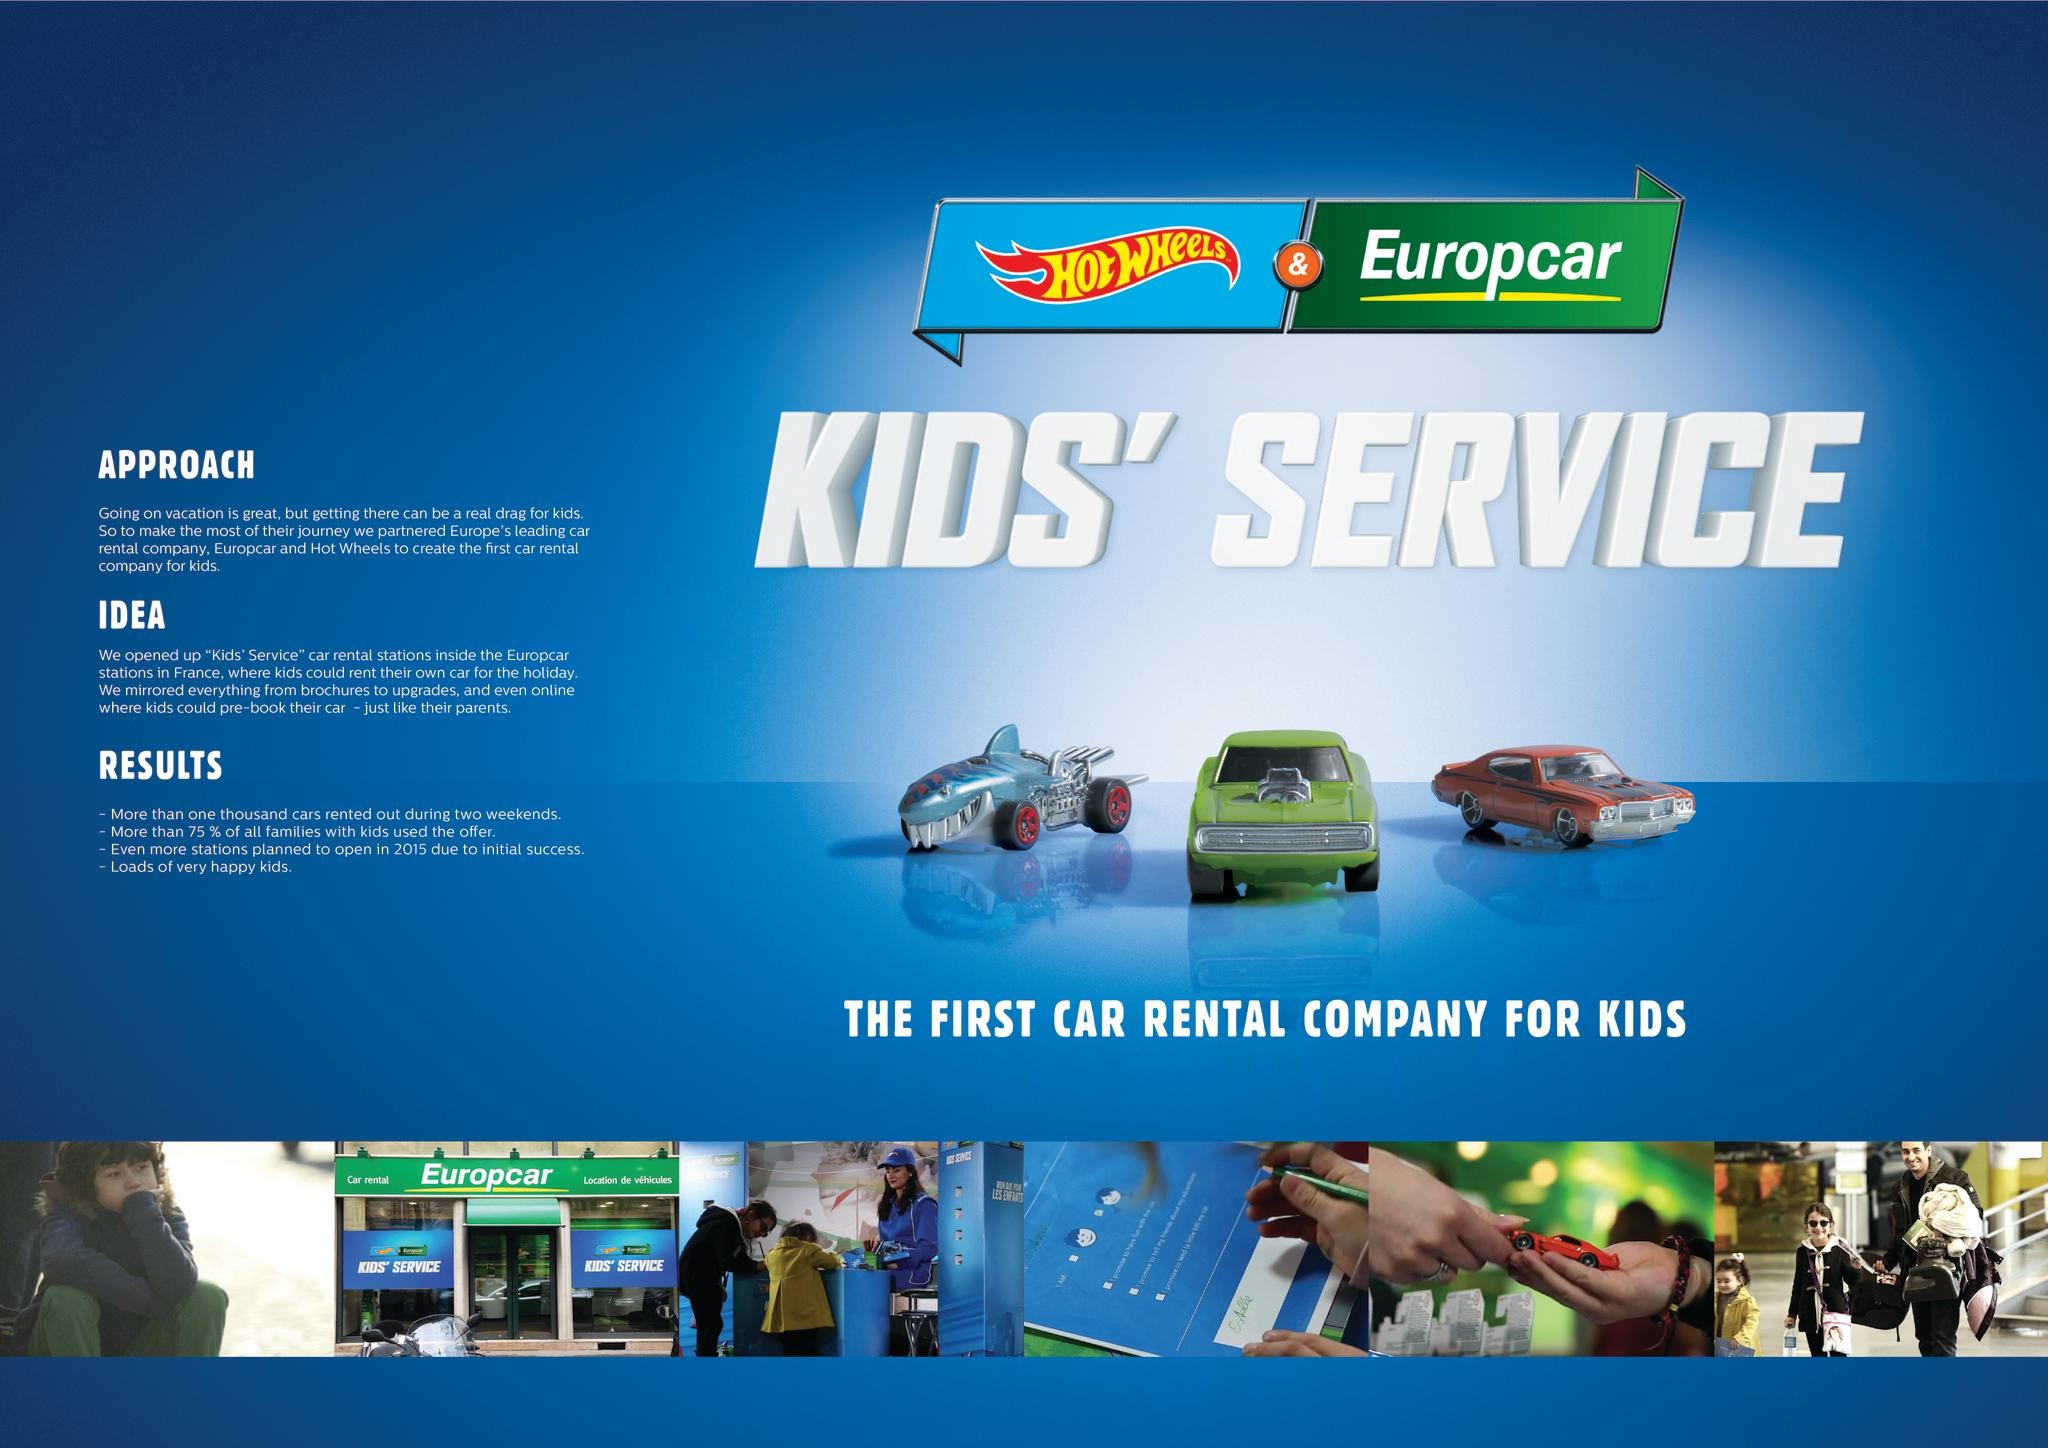 HOT WHEELS & EUROPCAR KIDS’ SERVICE